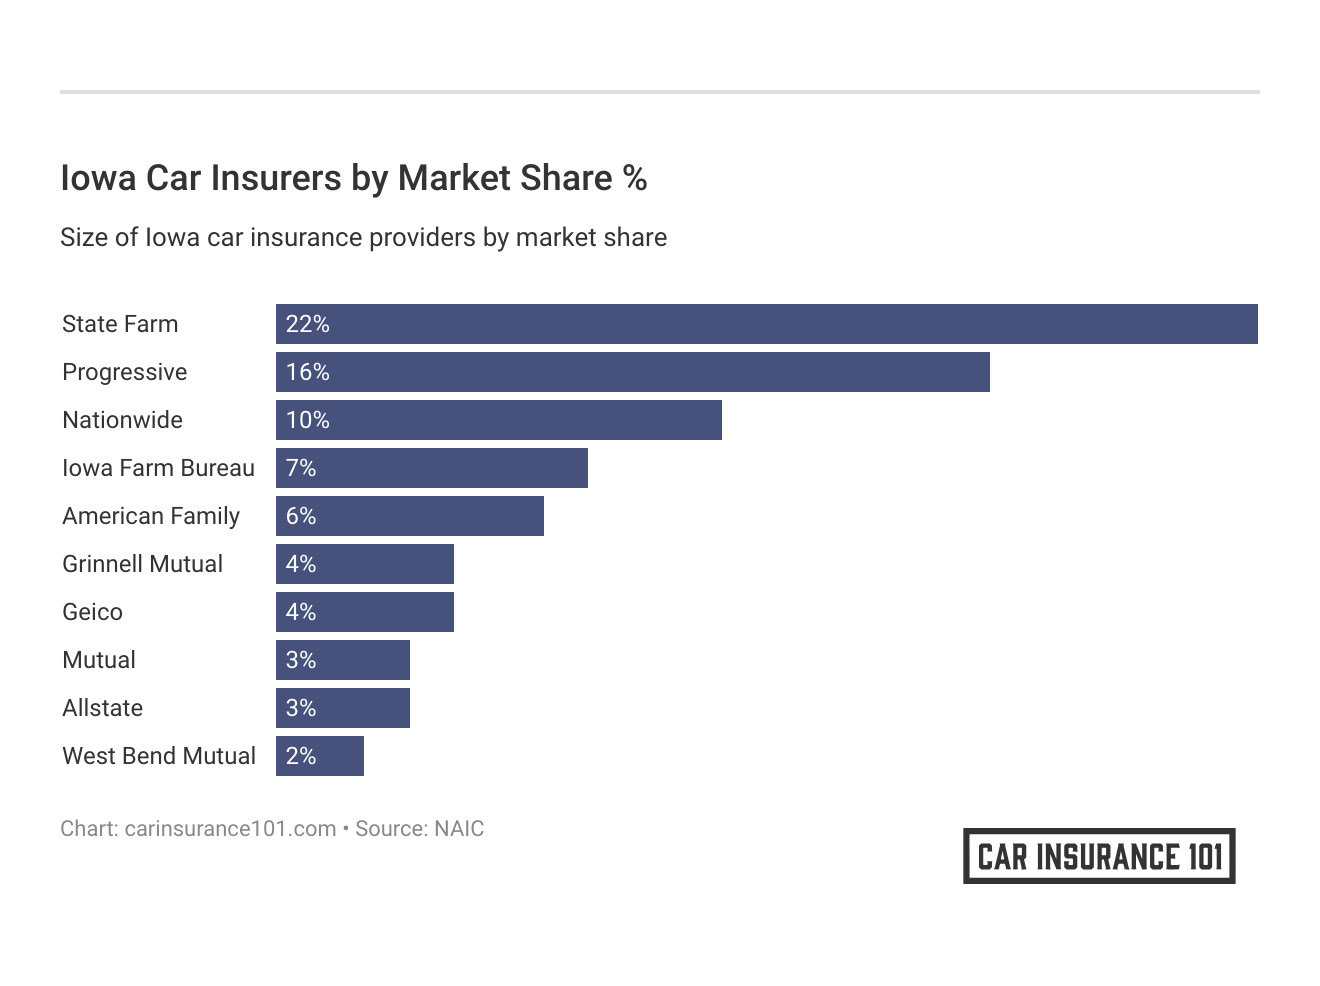 <h3>Iowa Car Insurers by Market Share %</h3>